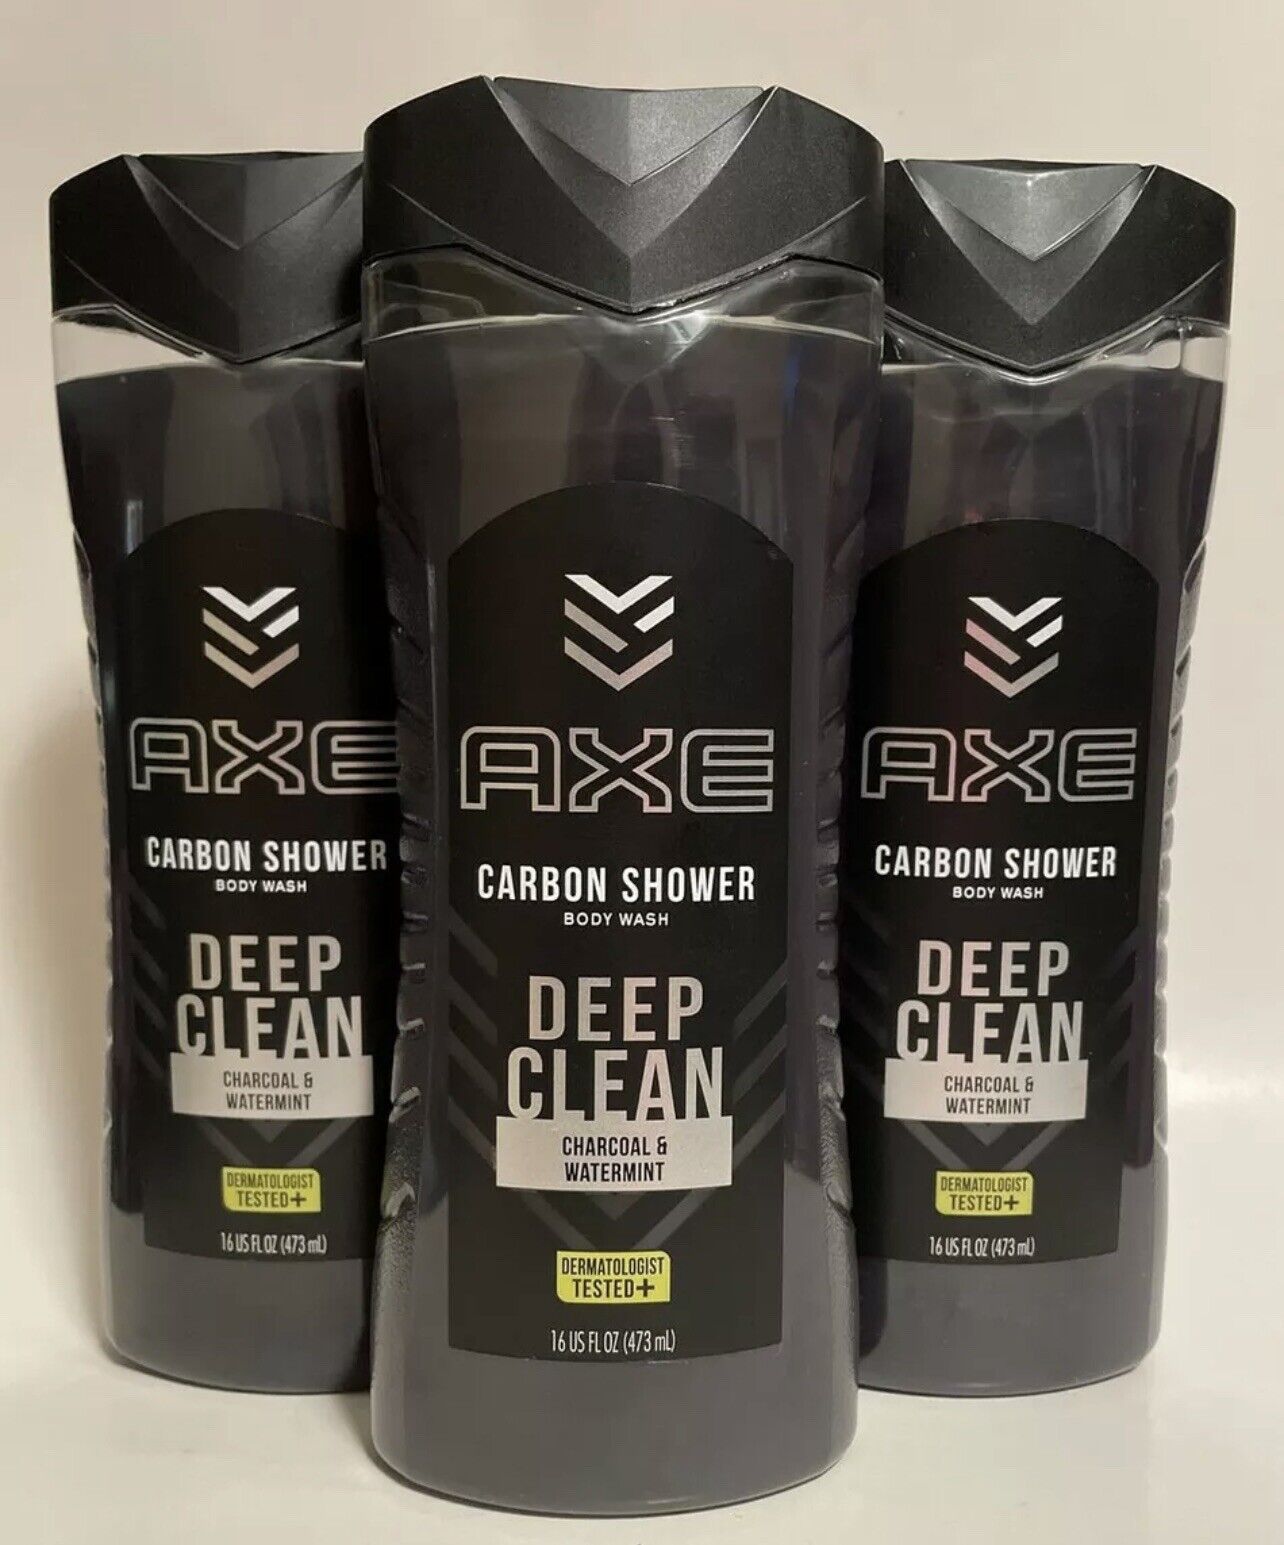 3 Axe Carbon Shower Body Wash Deep Clean Charcoal Watermint 16 oz. each